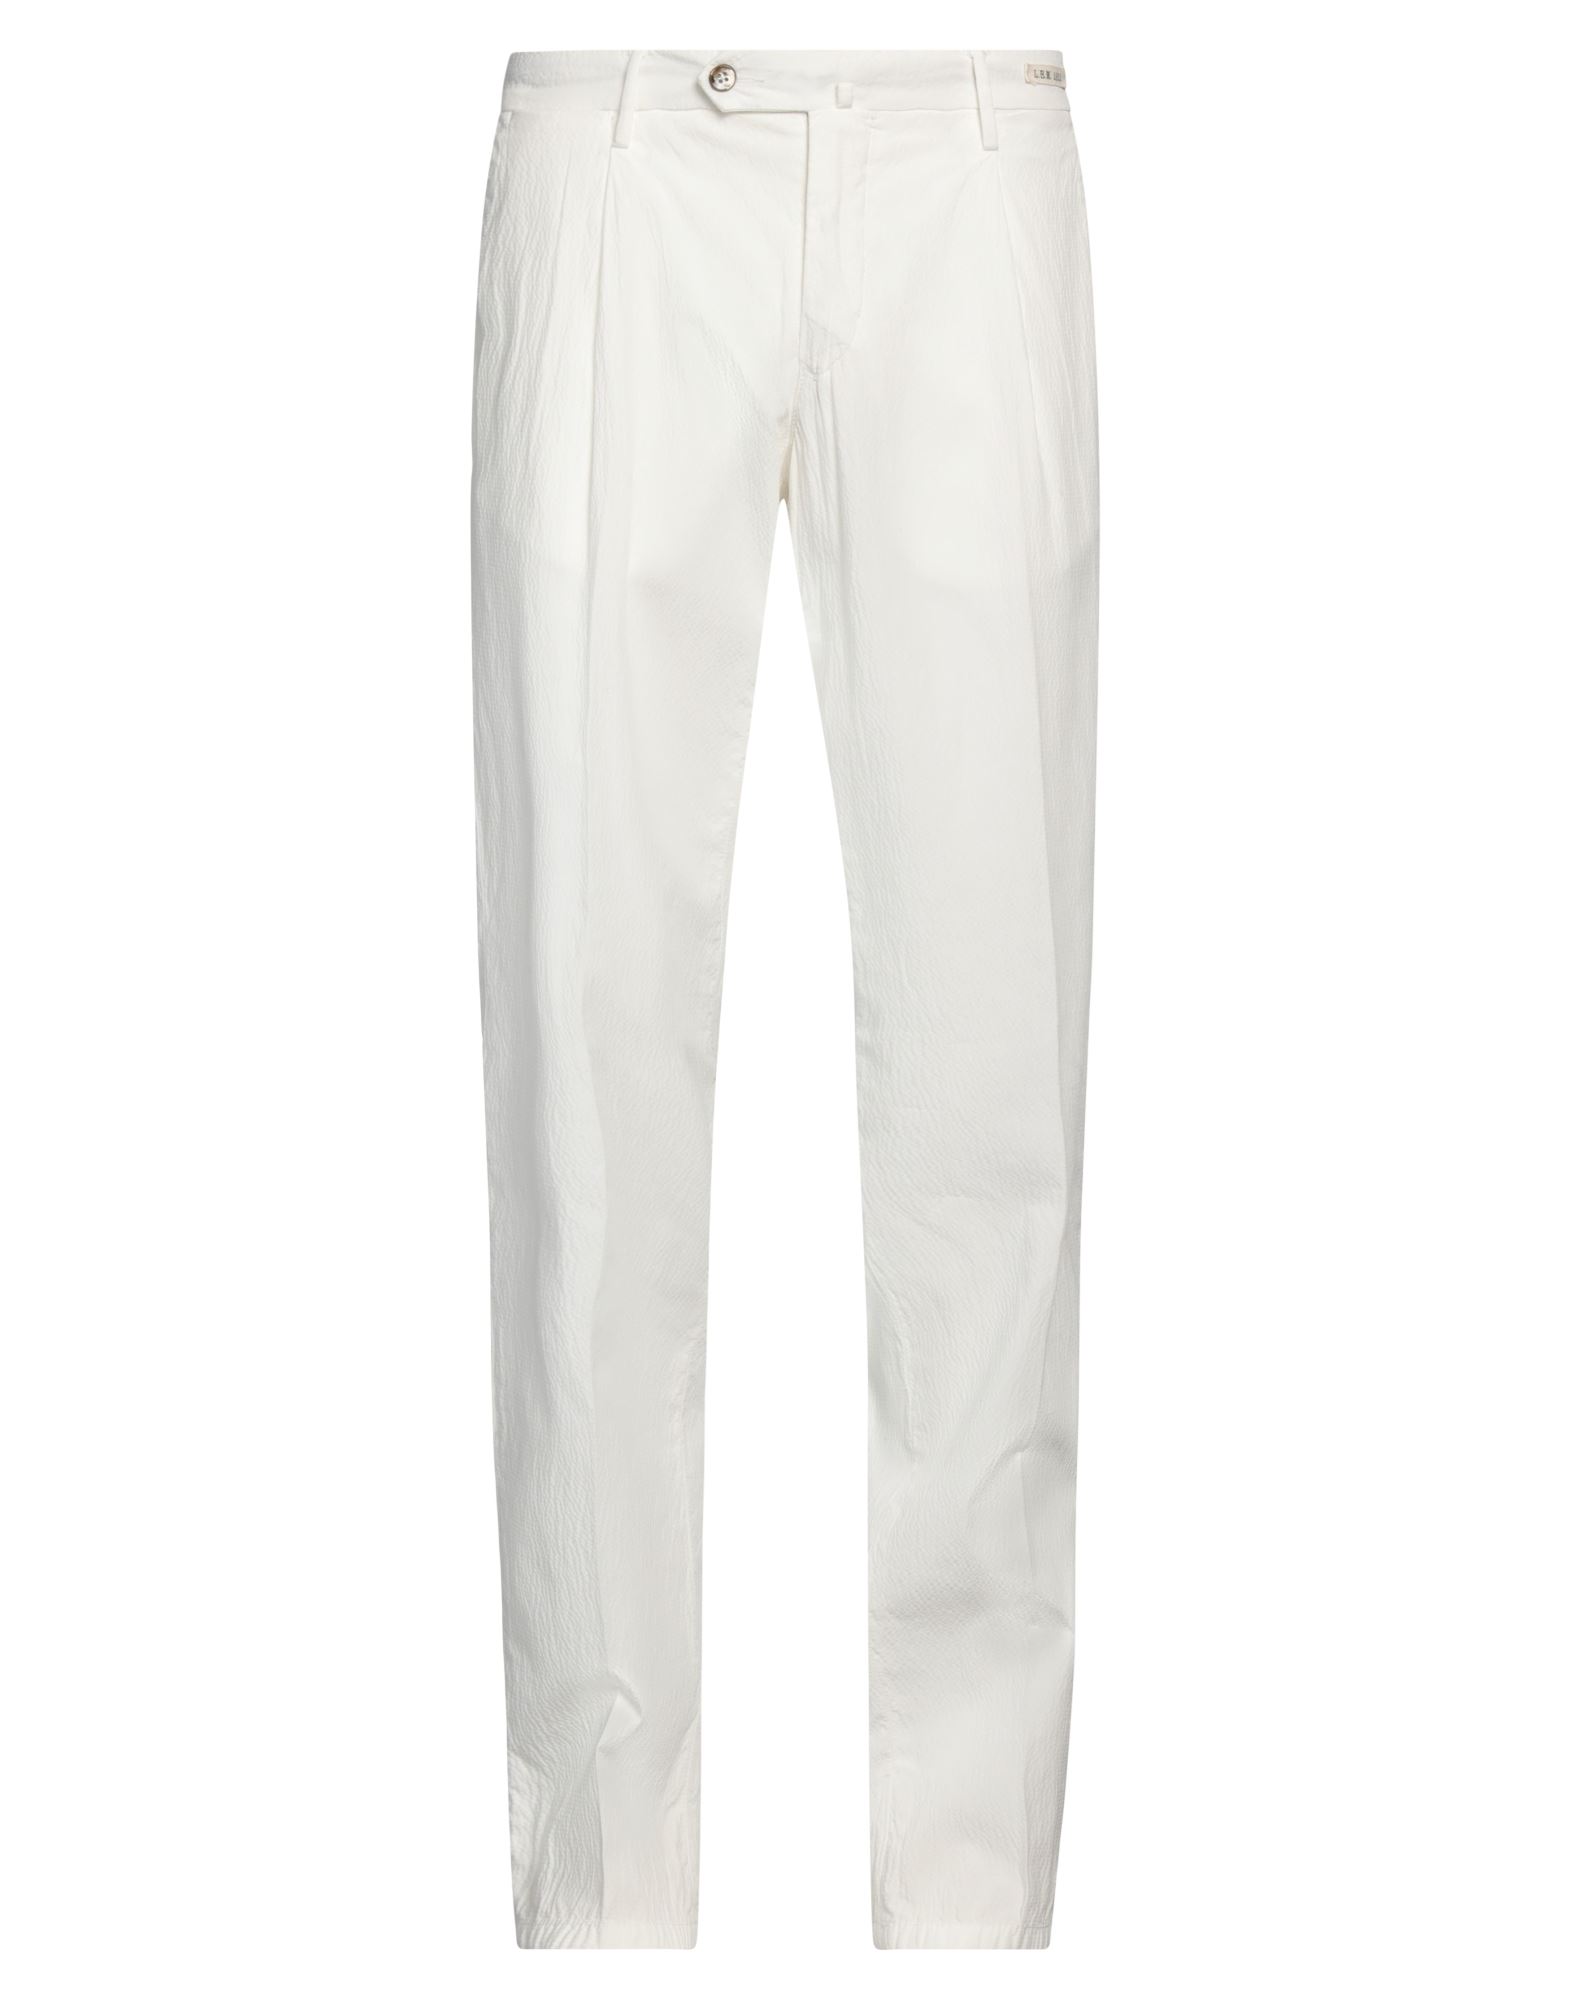 Lbm 1911 Pants In White